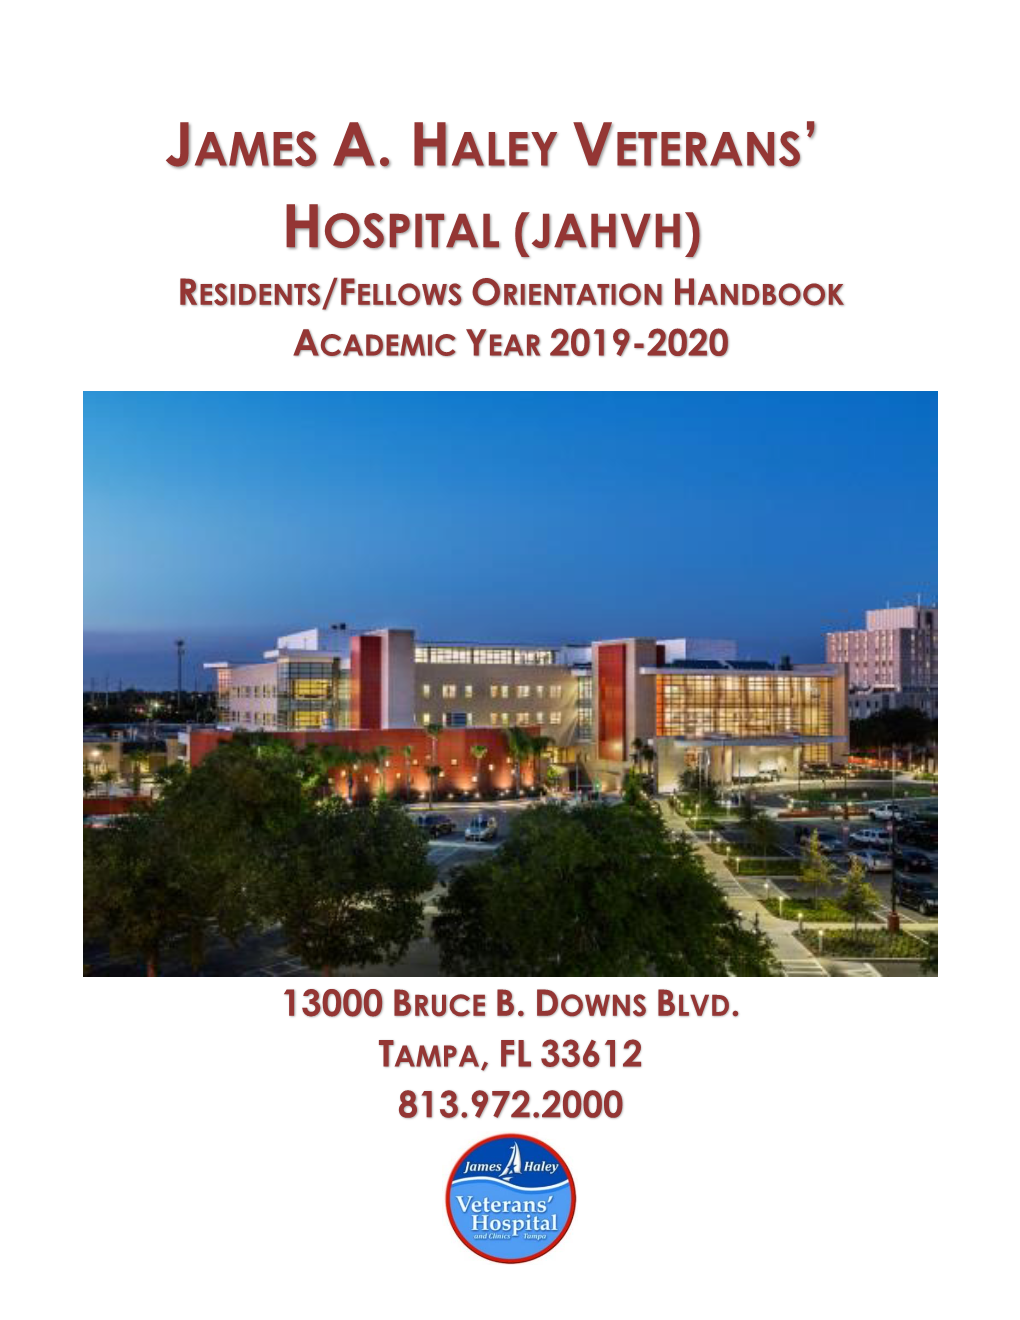 Since 1972, James A. Haley Veterans' Hospital (JAHVH) Has Been Improving